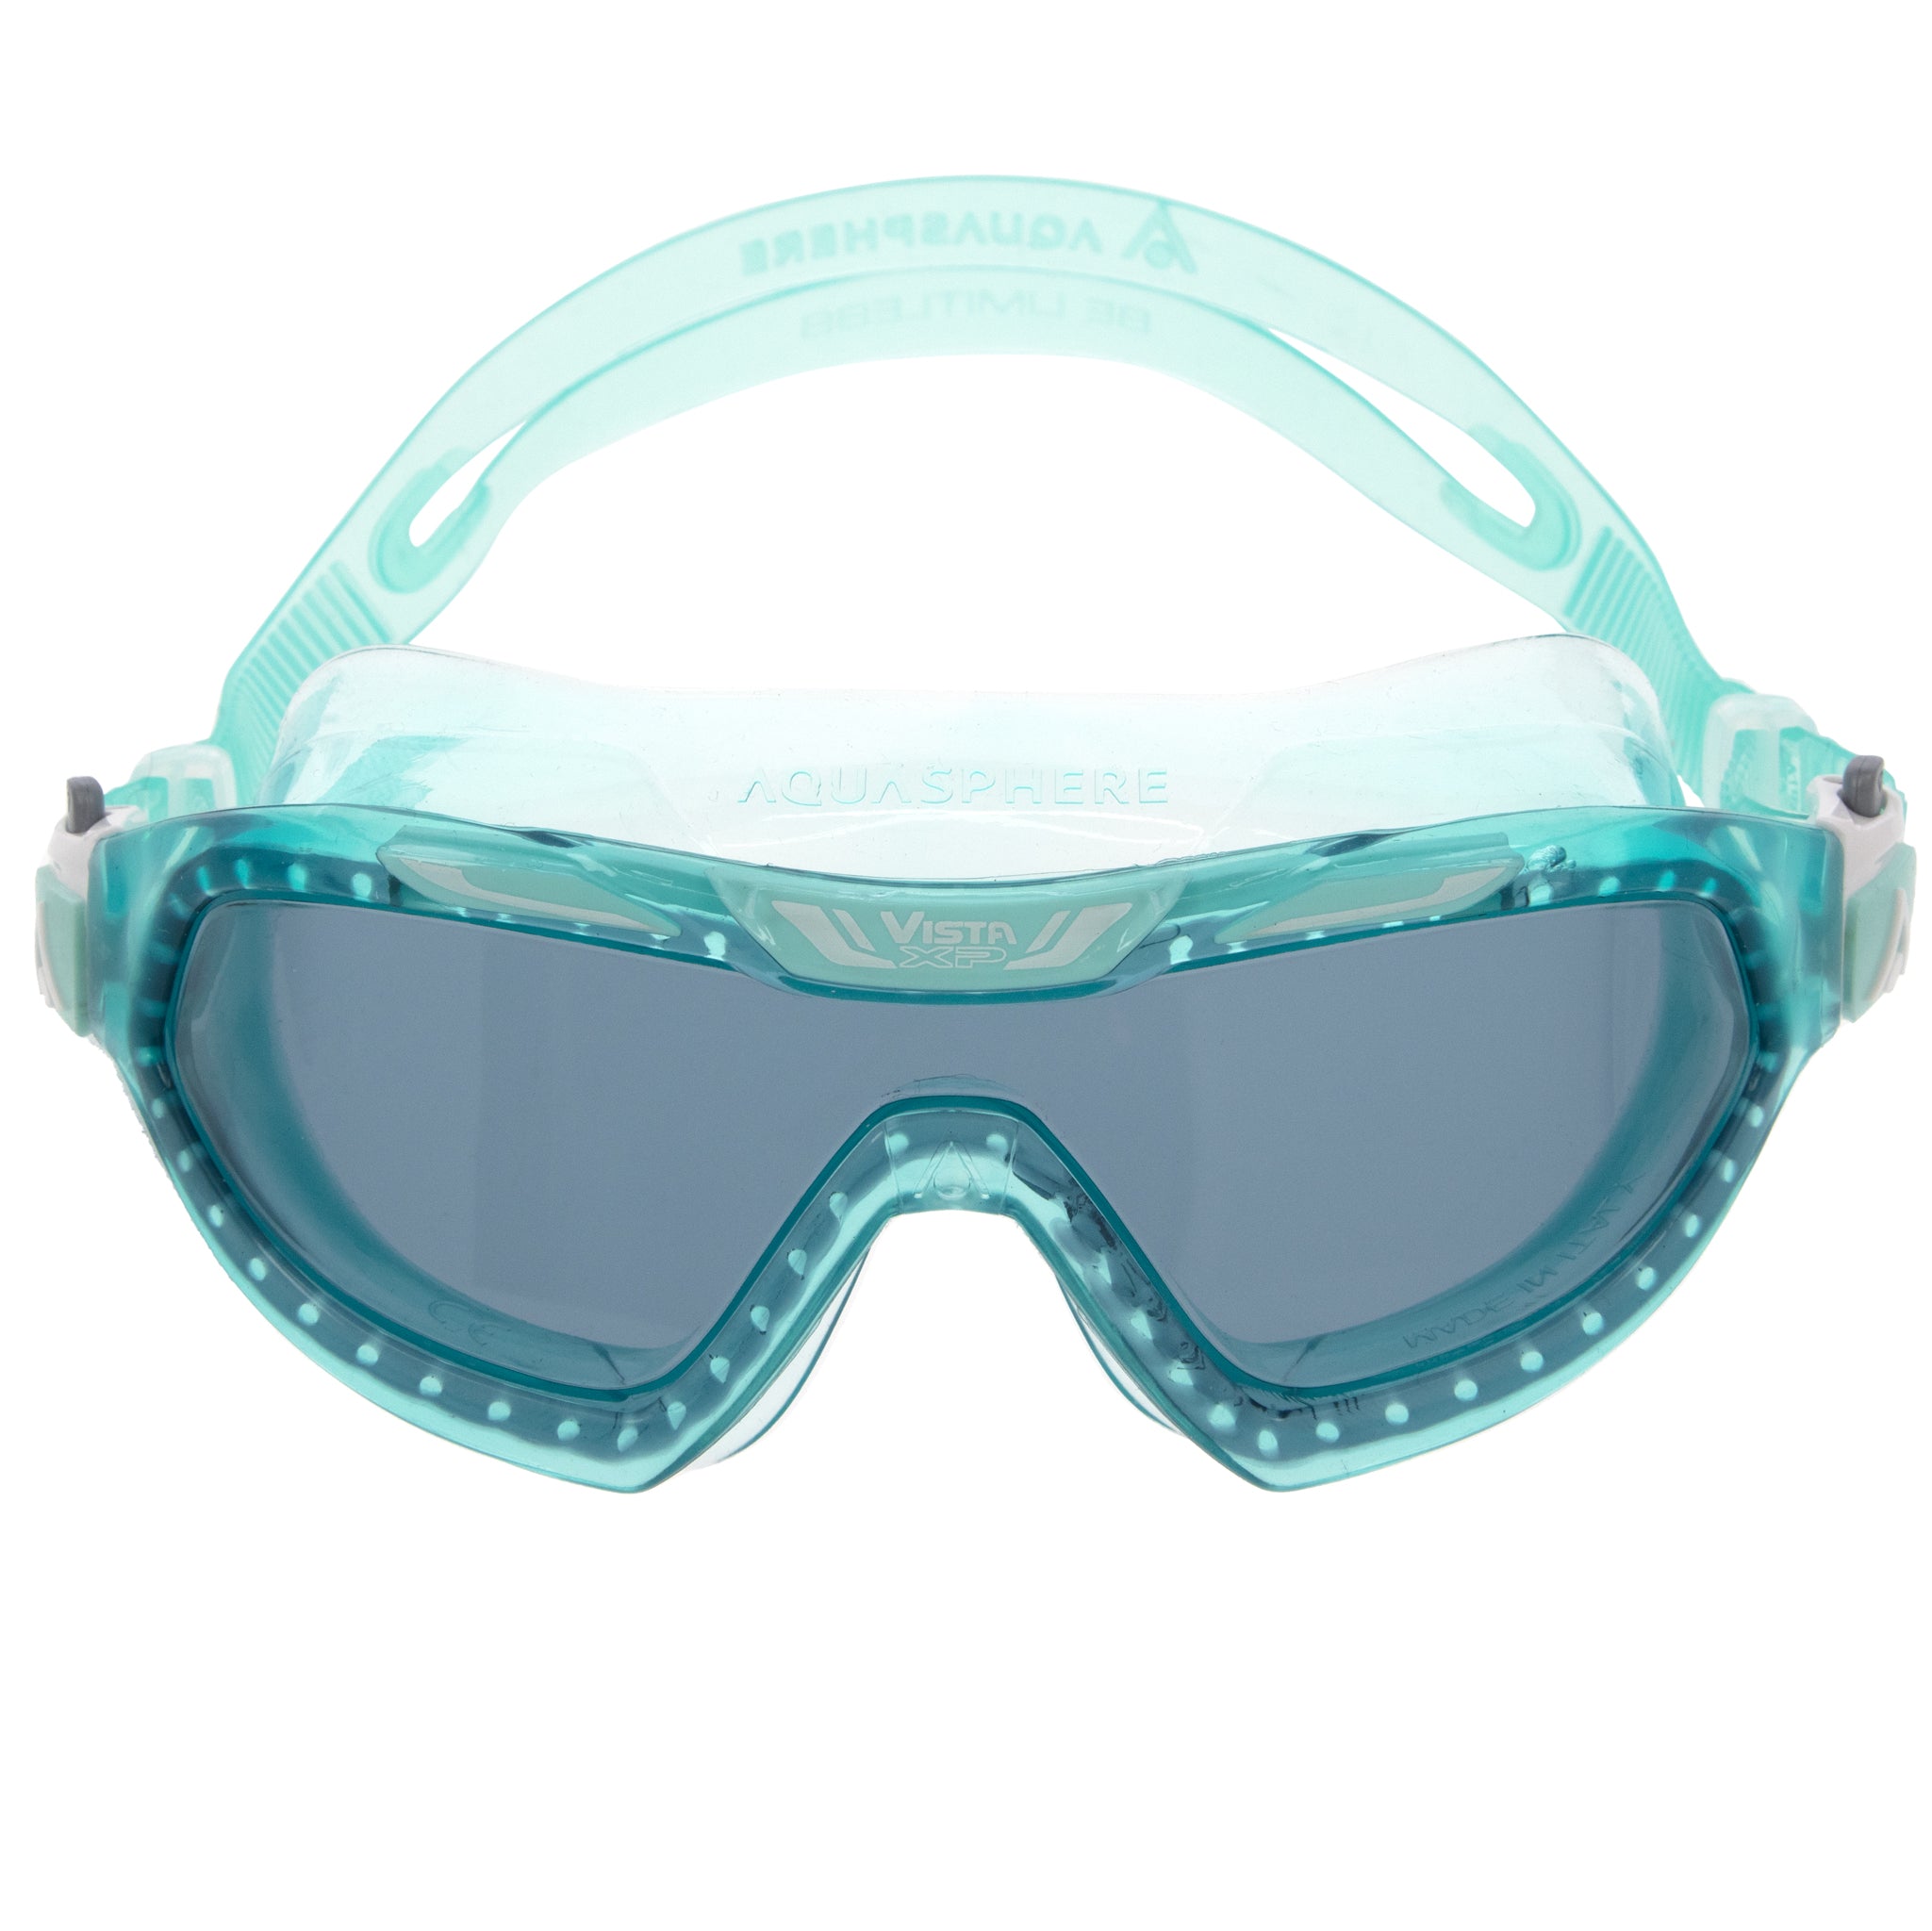 Aquasphere Vista XP Swimming Goggles Mask Smoke Tinted Lenses